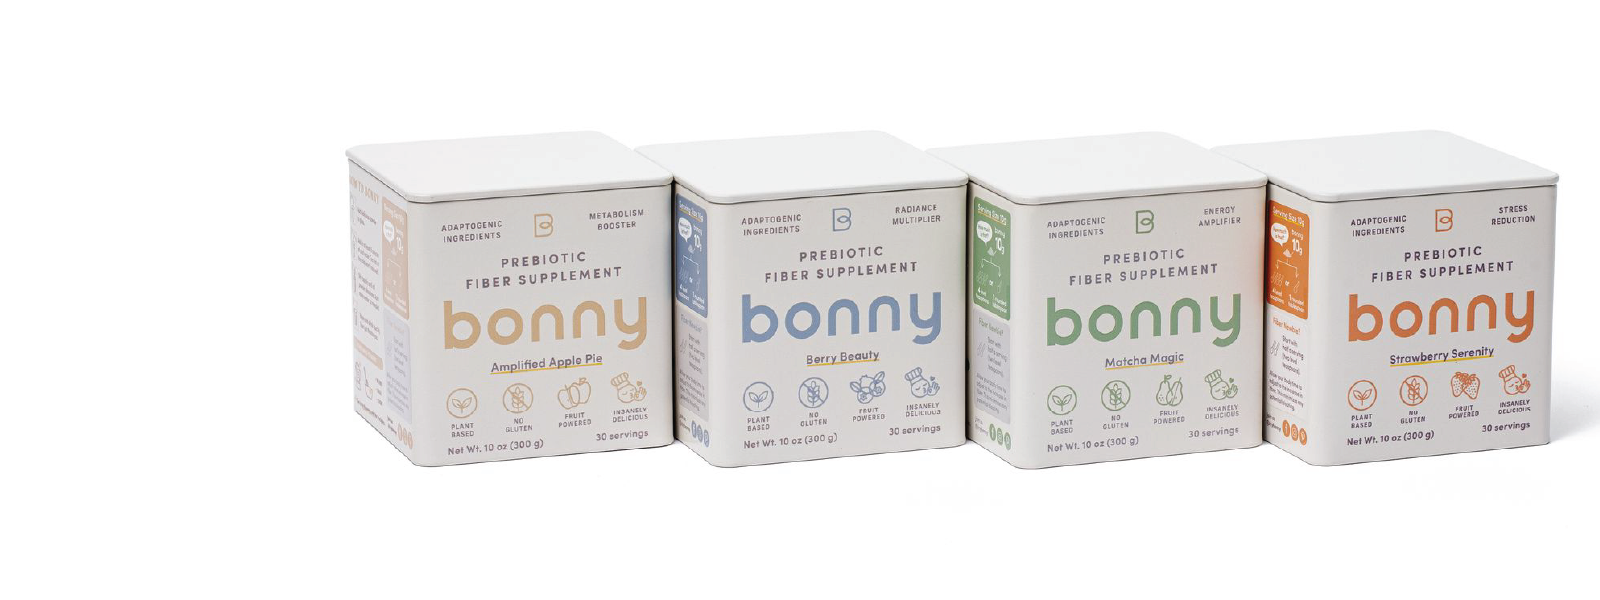 Bonny Fiber Supplements on white background